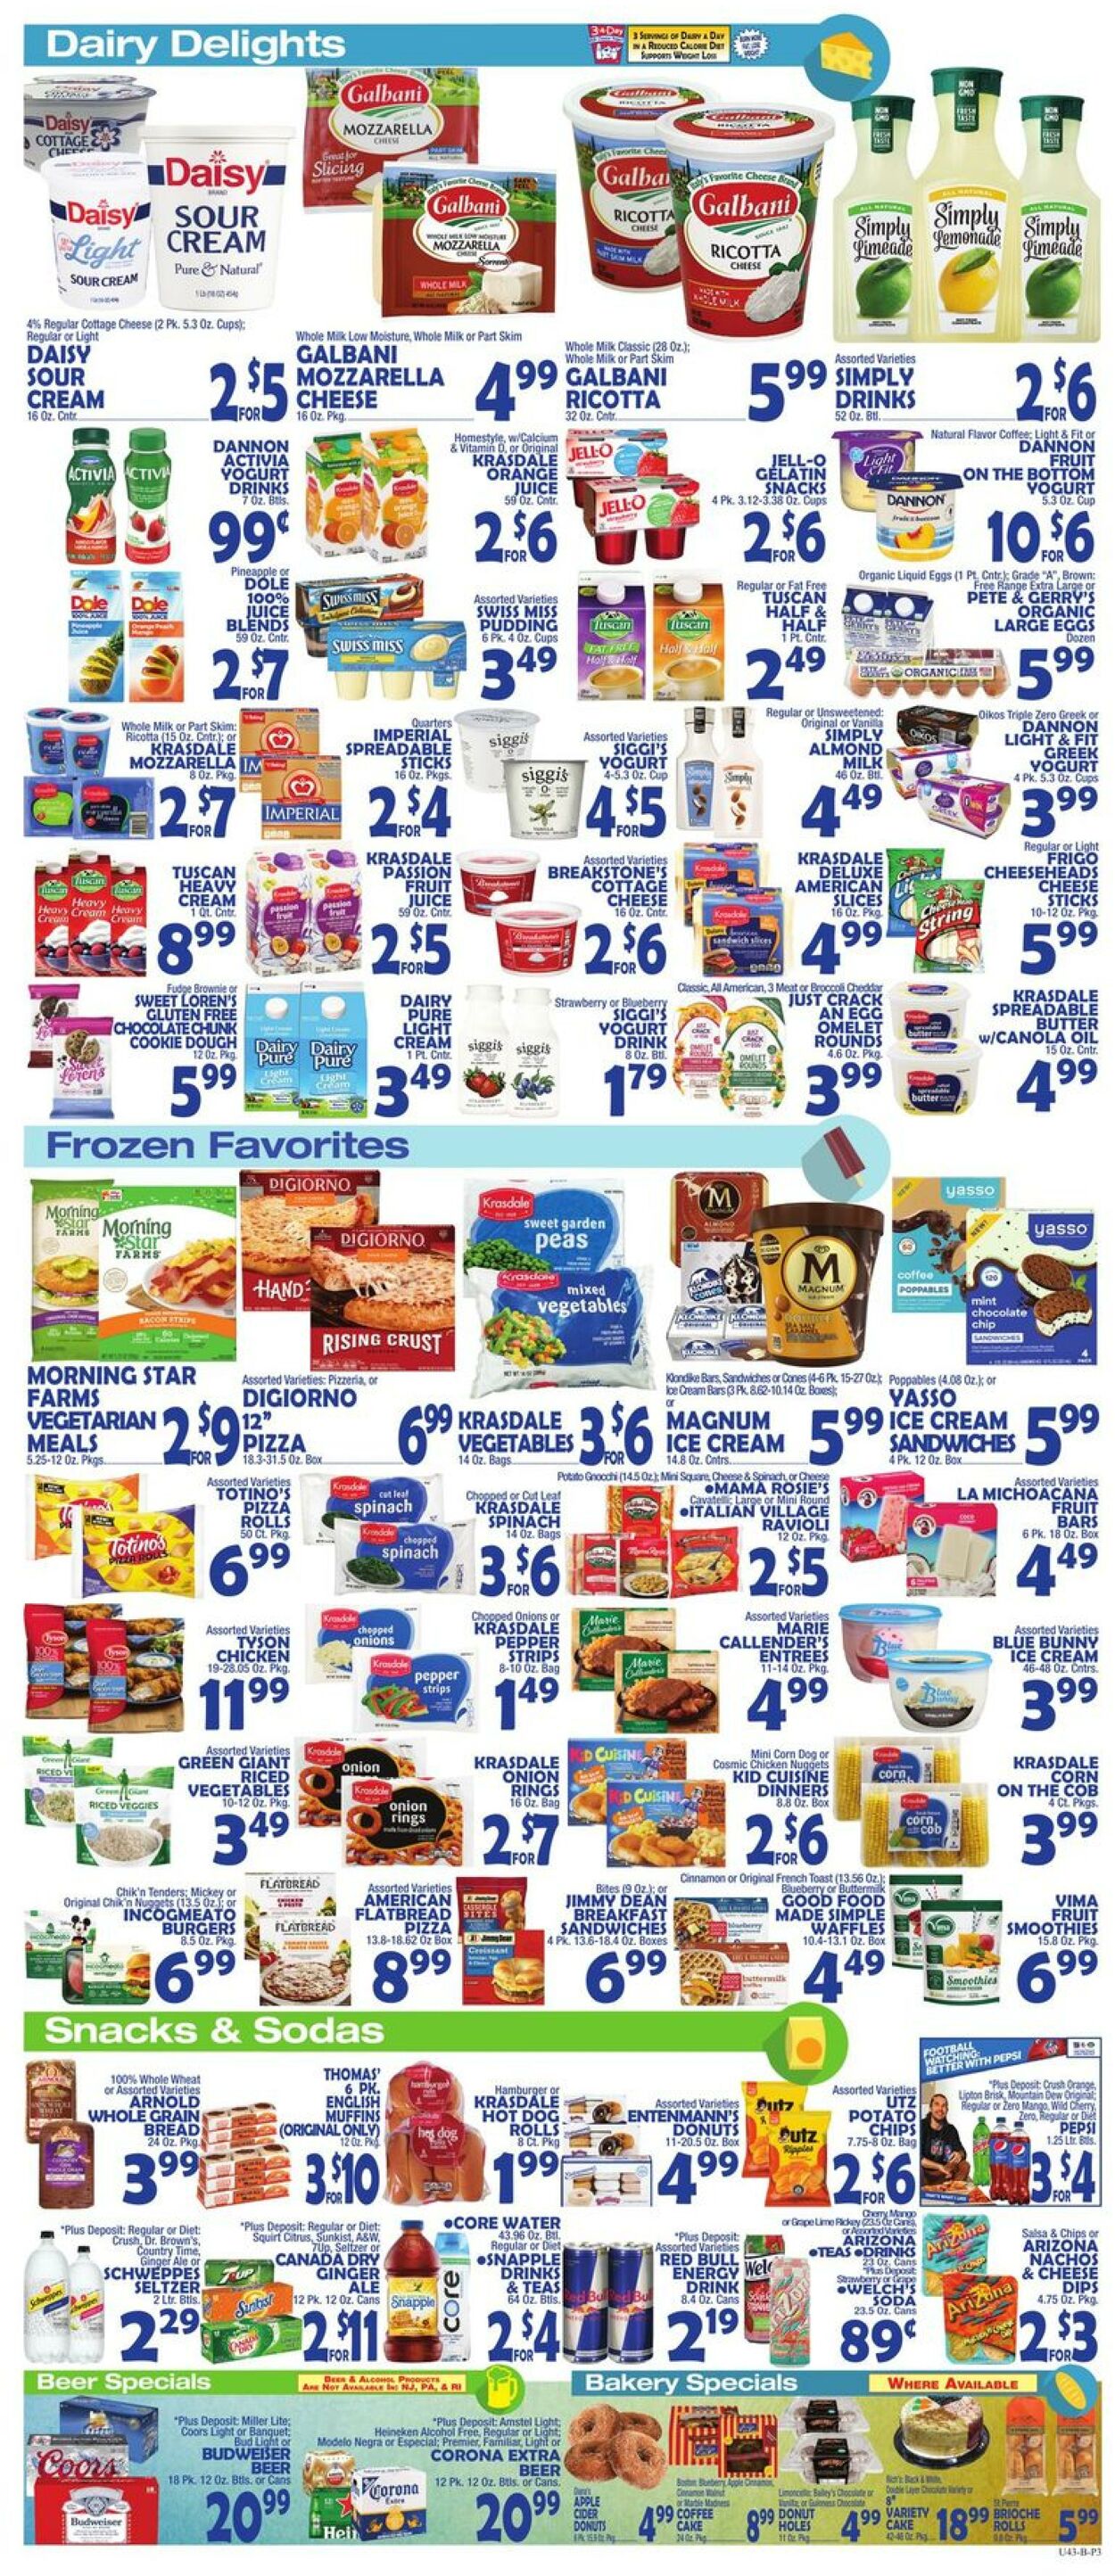 Weekly ad Bravo Supermarkets 10/07/2022 - 10/13/2022